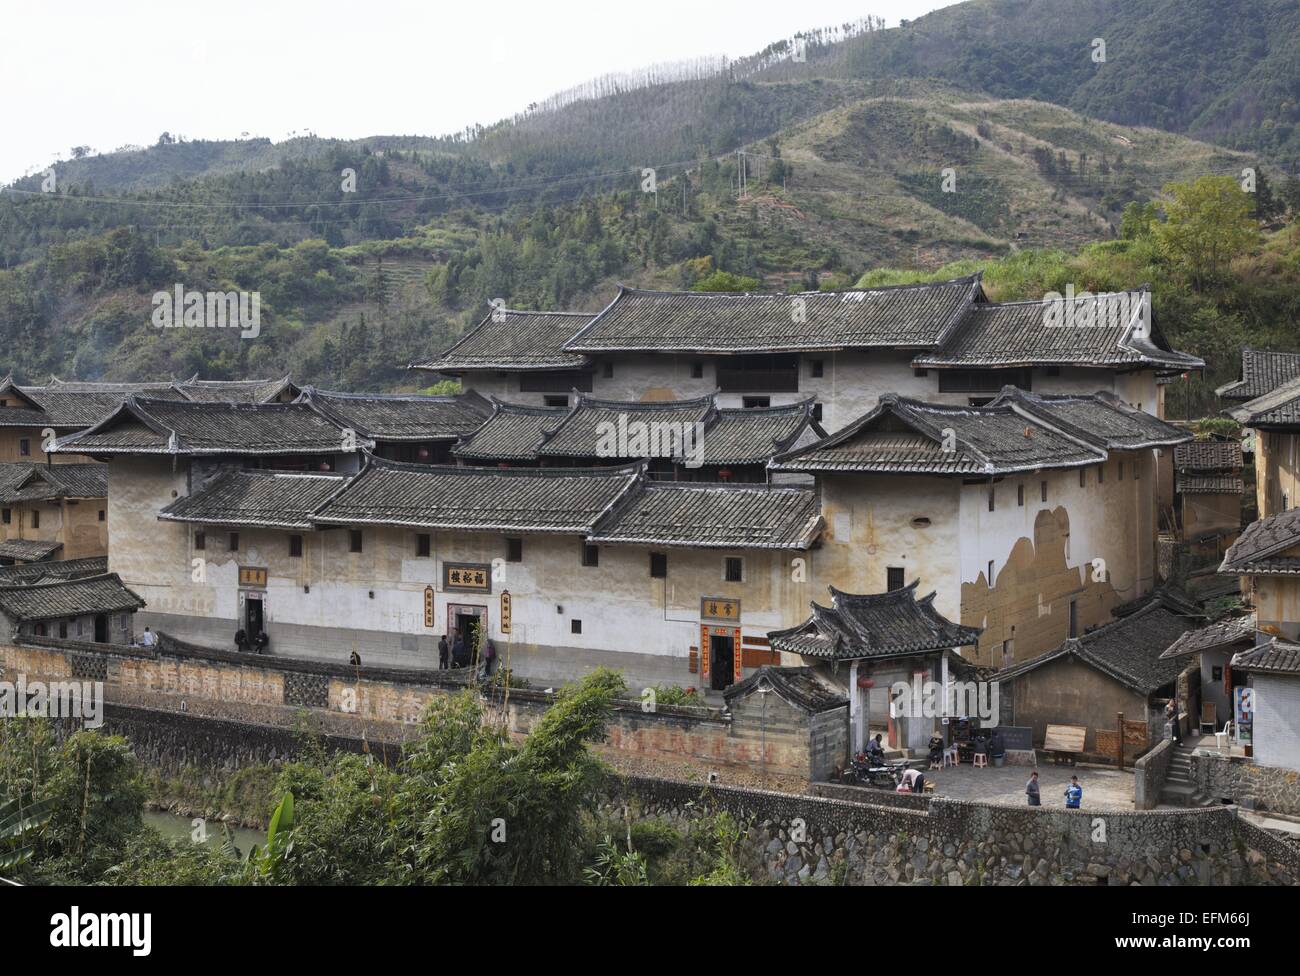 Fuyu Lou, tulou, earth building of Hakka people, Yongding, Fujian, China Stock Photo